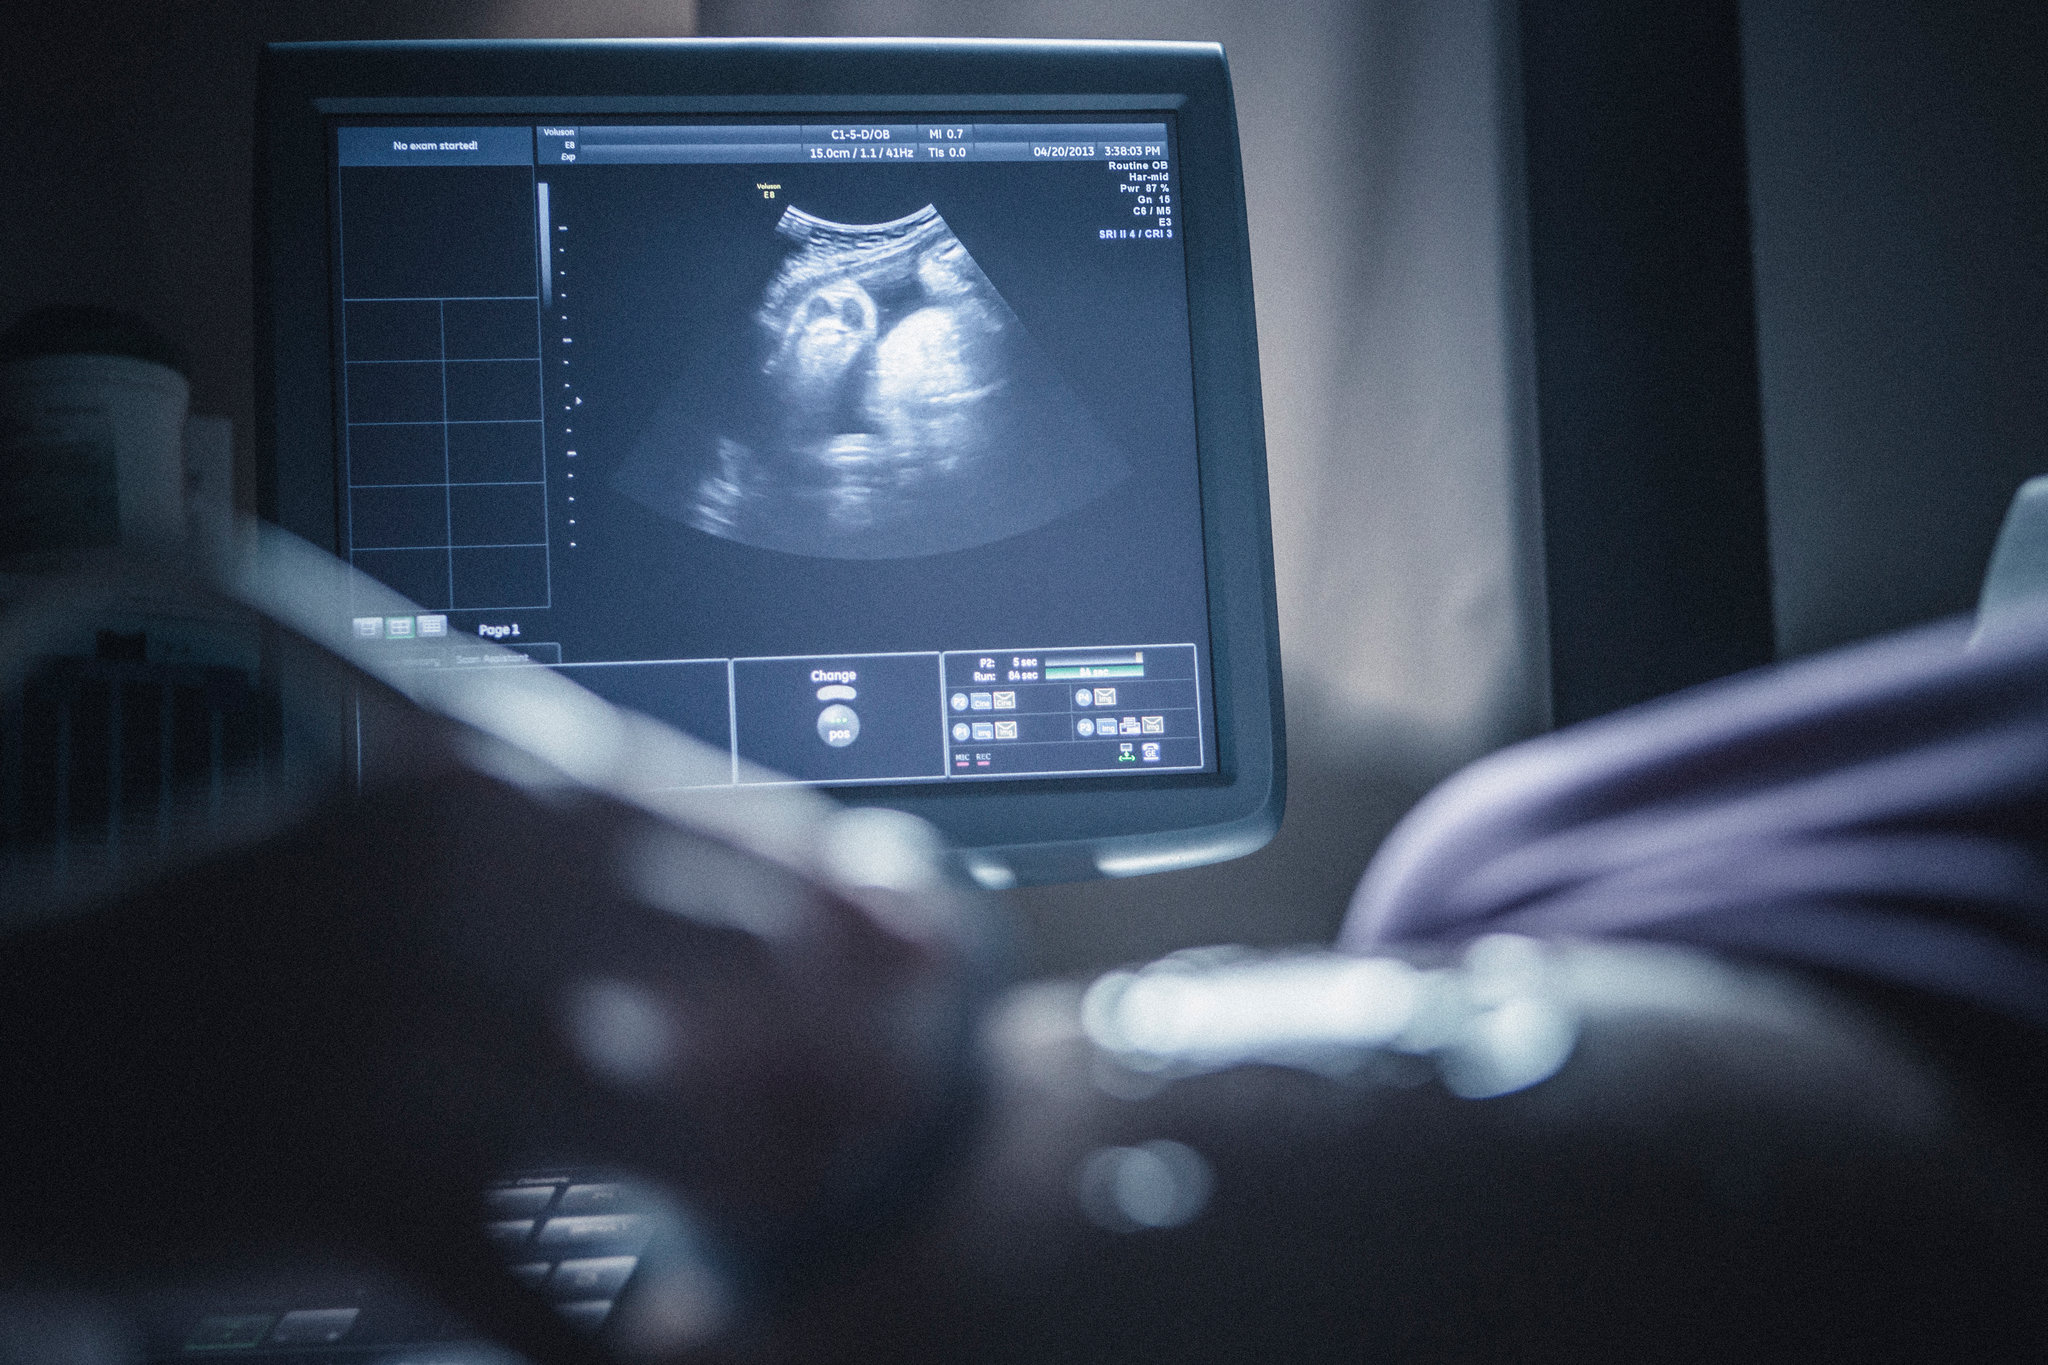  سونوگرافی غربالگری اول| Ultrasound screening first